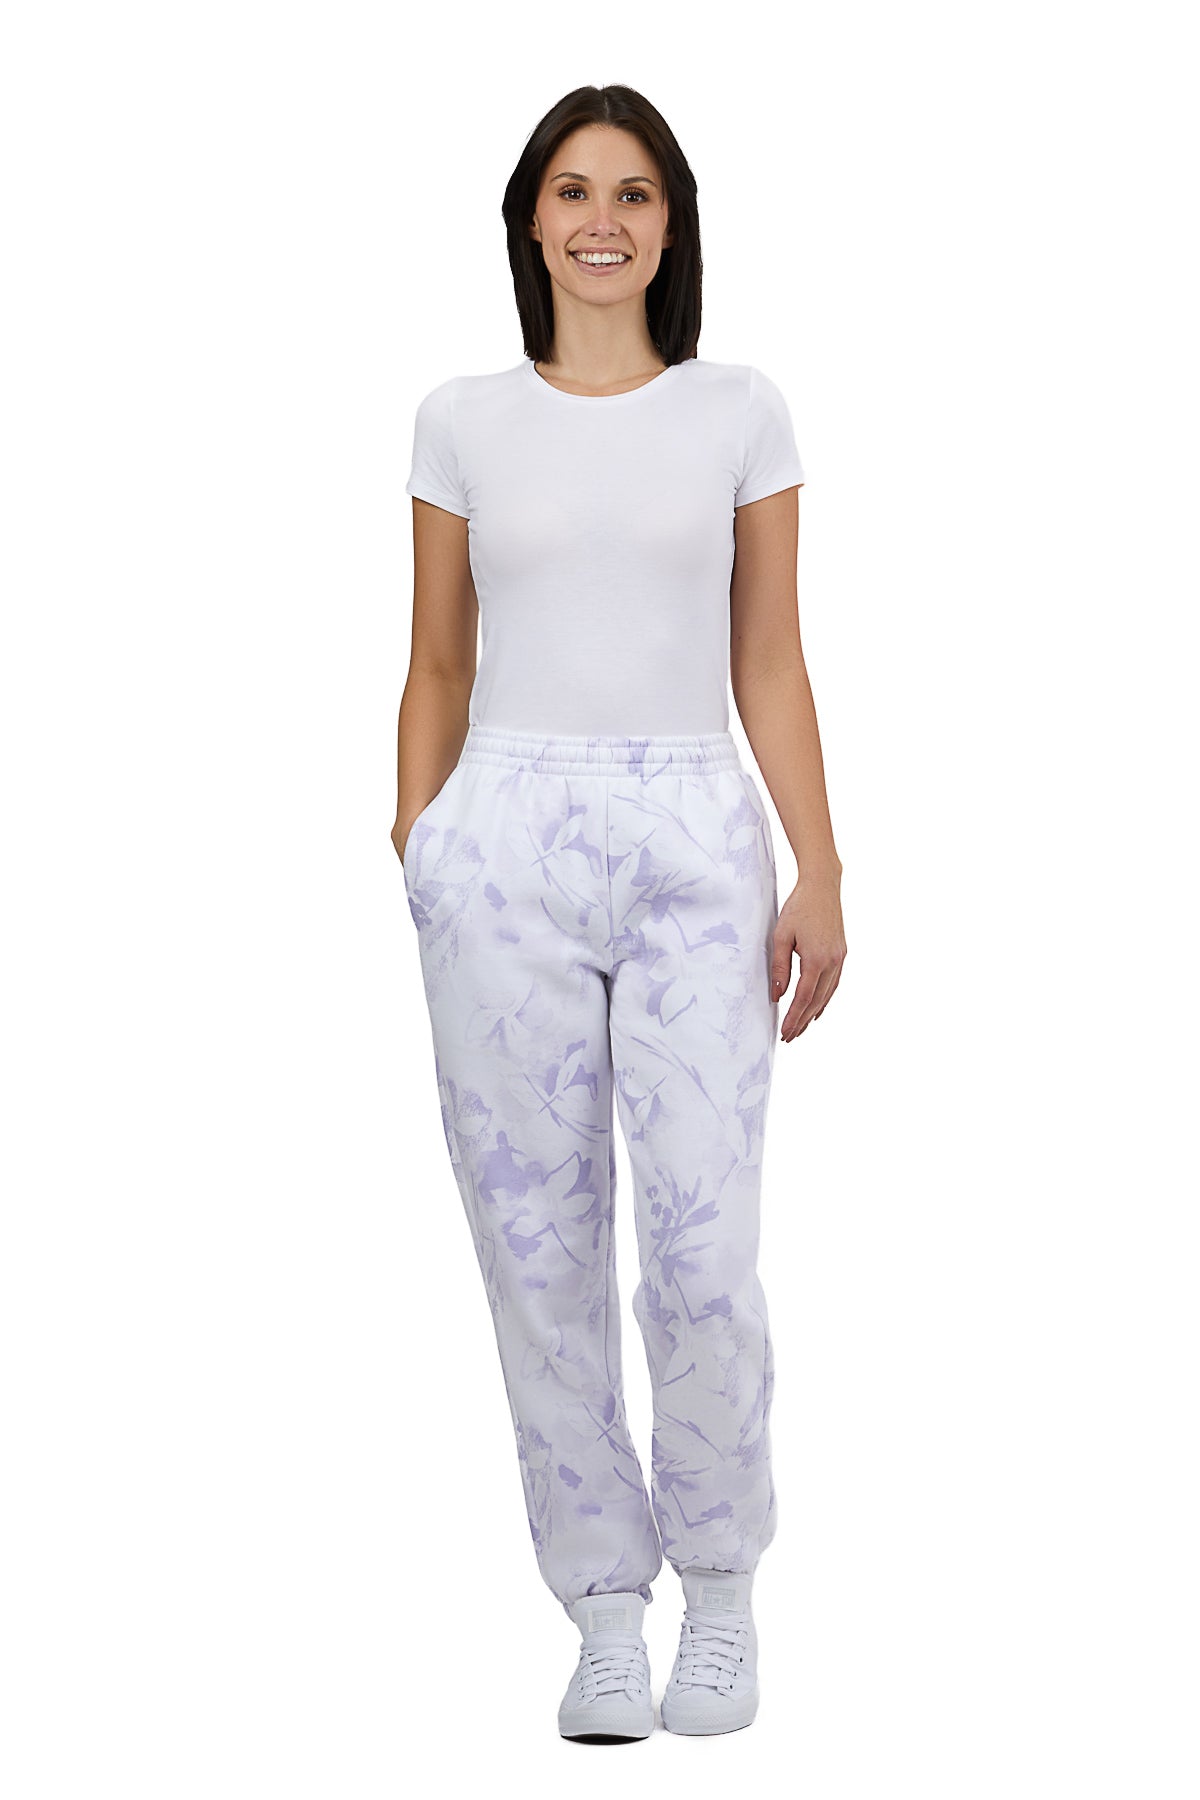 Nova premium fleece relaxed sweatpants in Lavender Floral Print